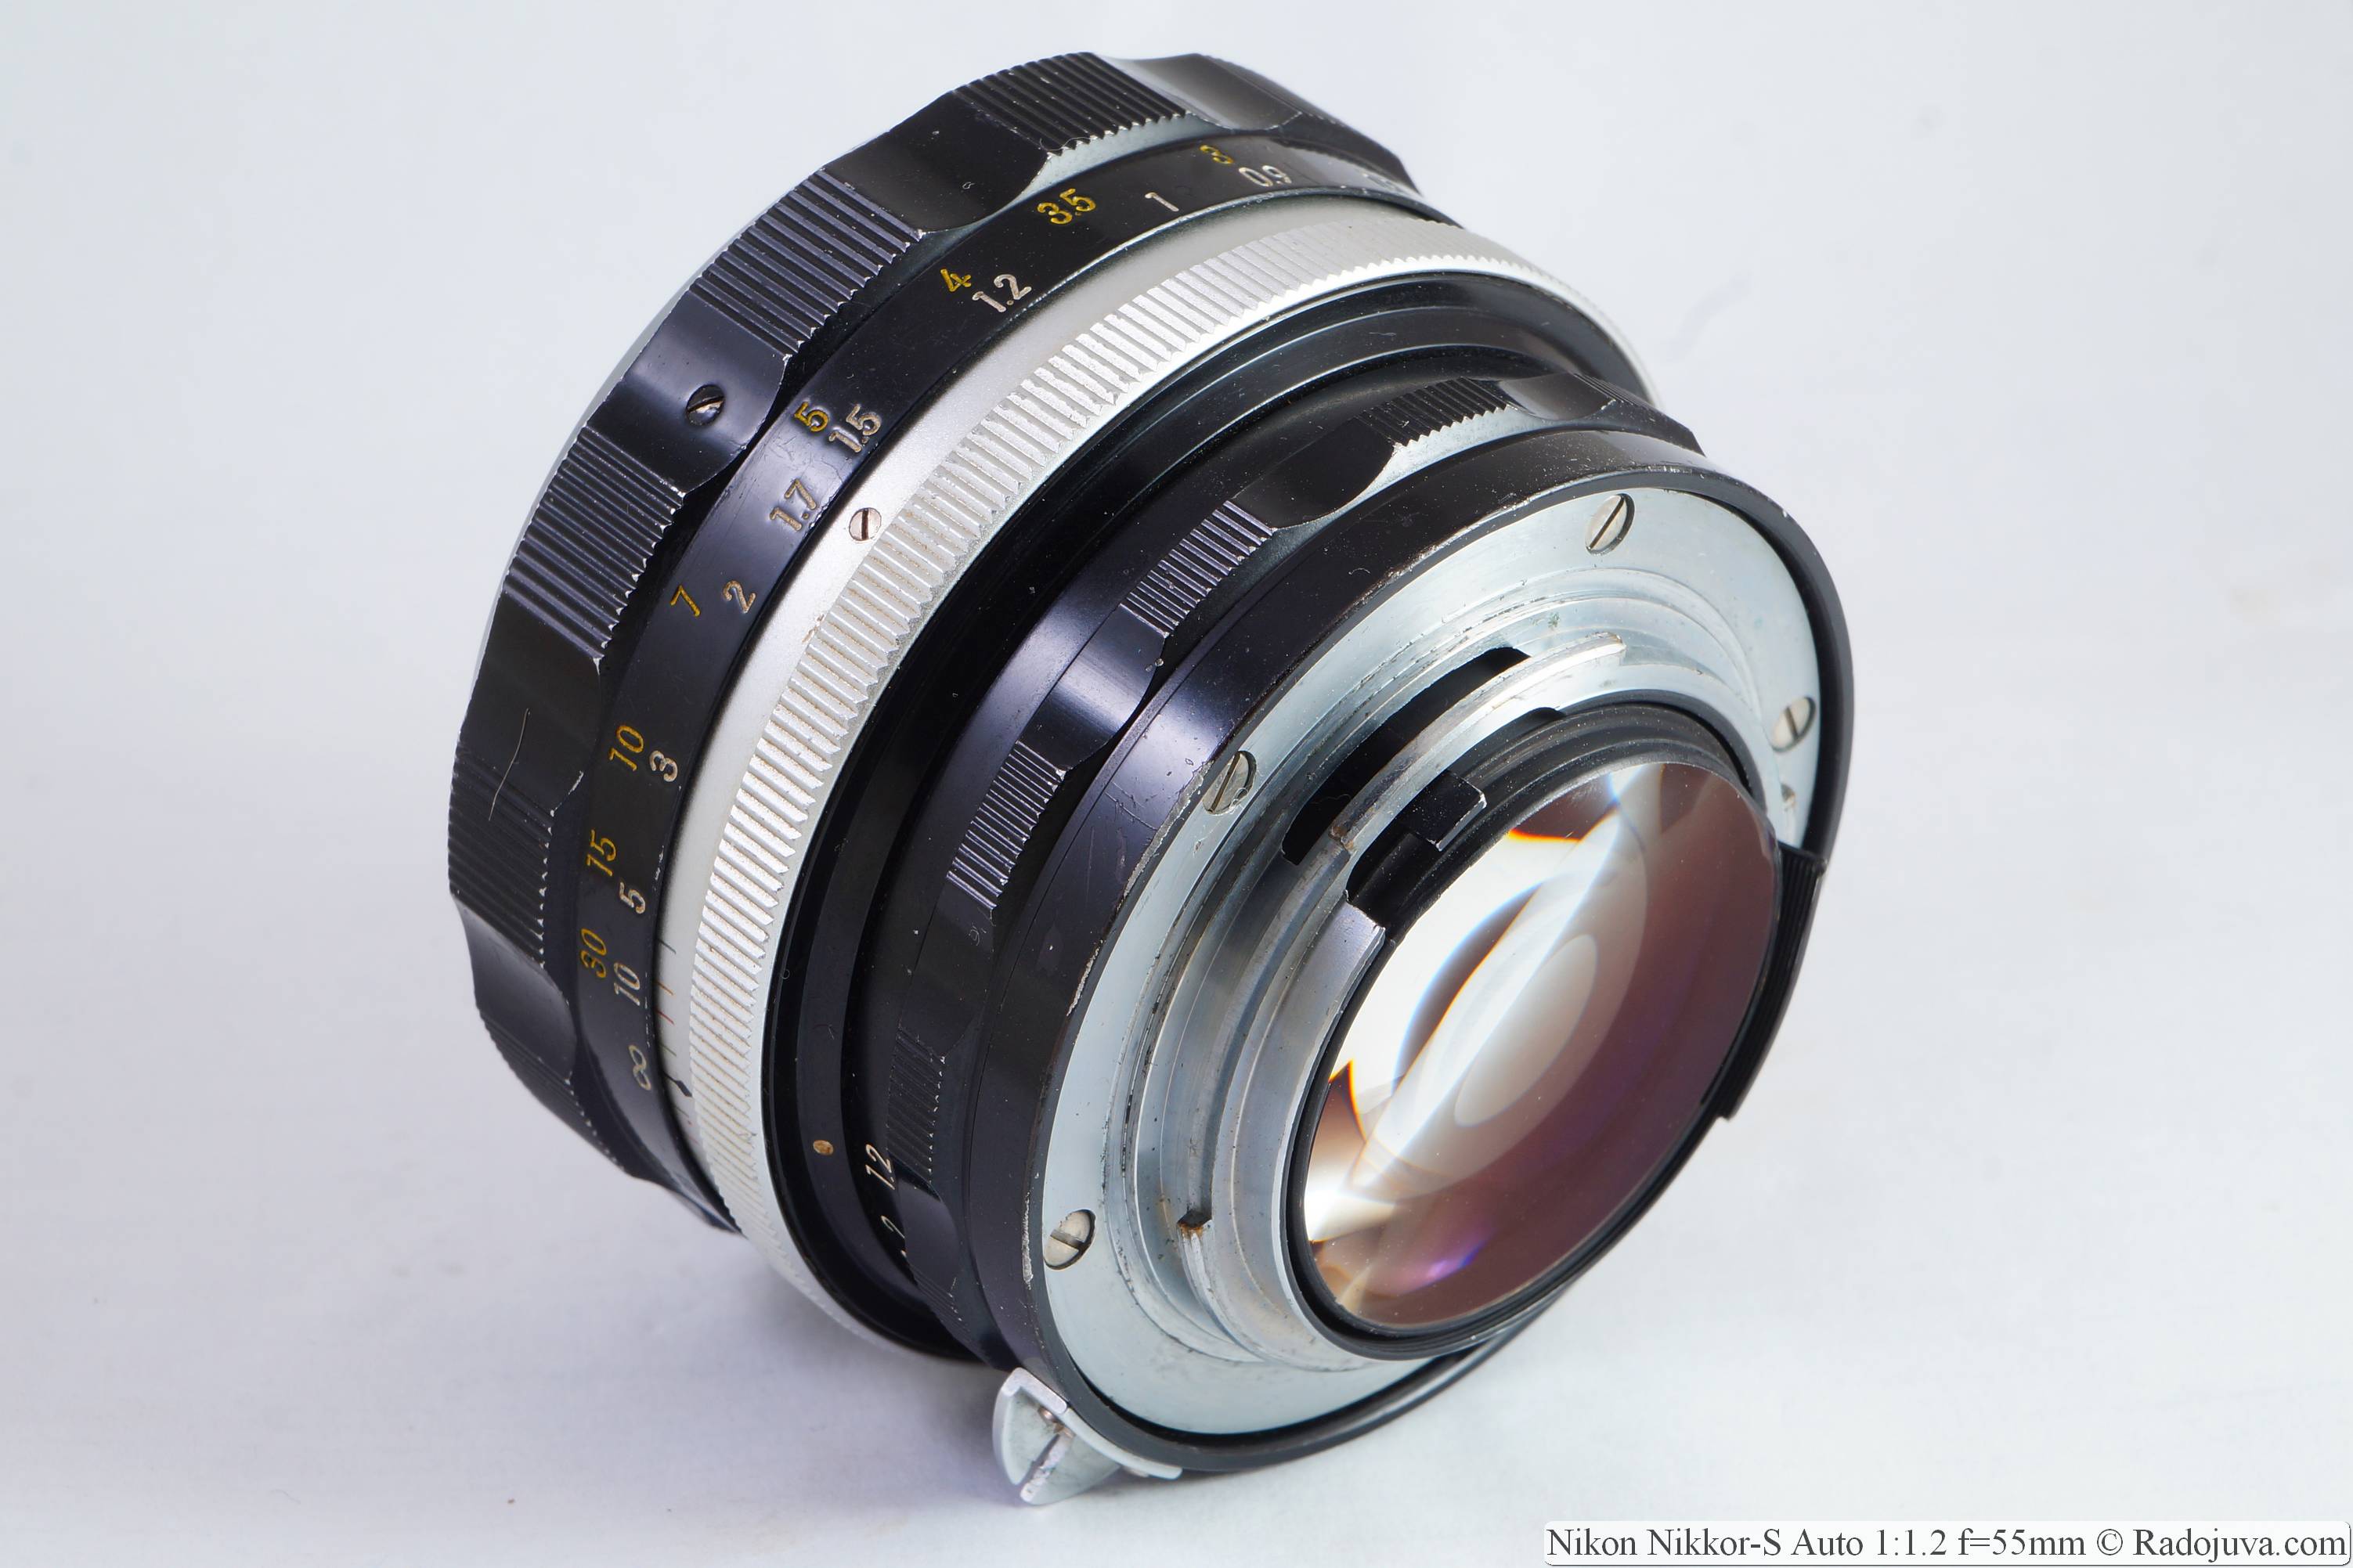 Nikon Nikkor-S Auto 1: 1.2 f = 55mm